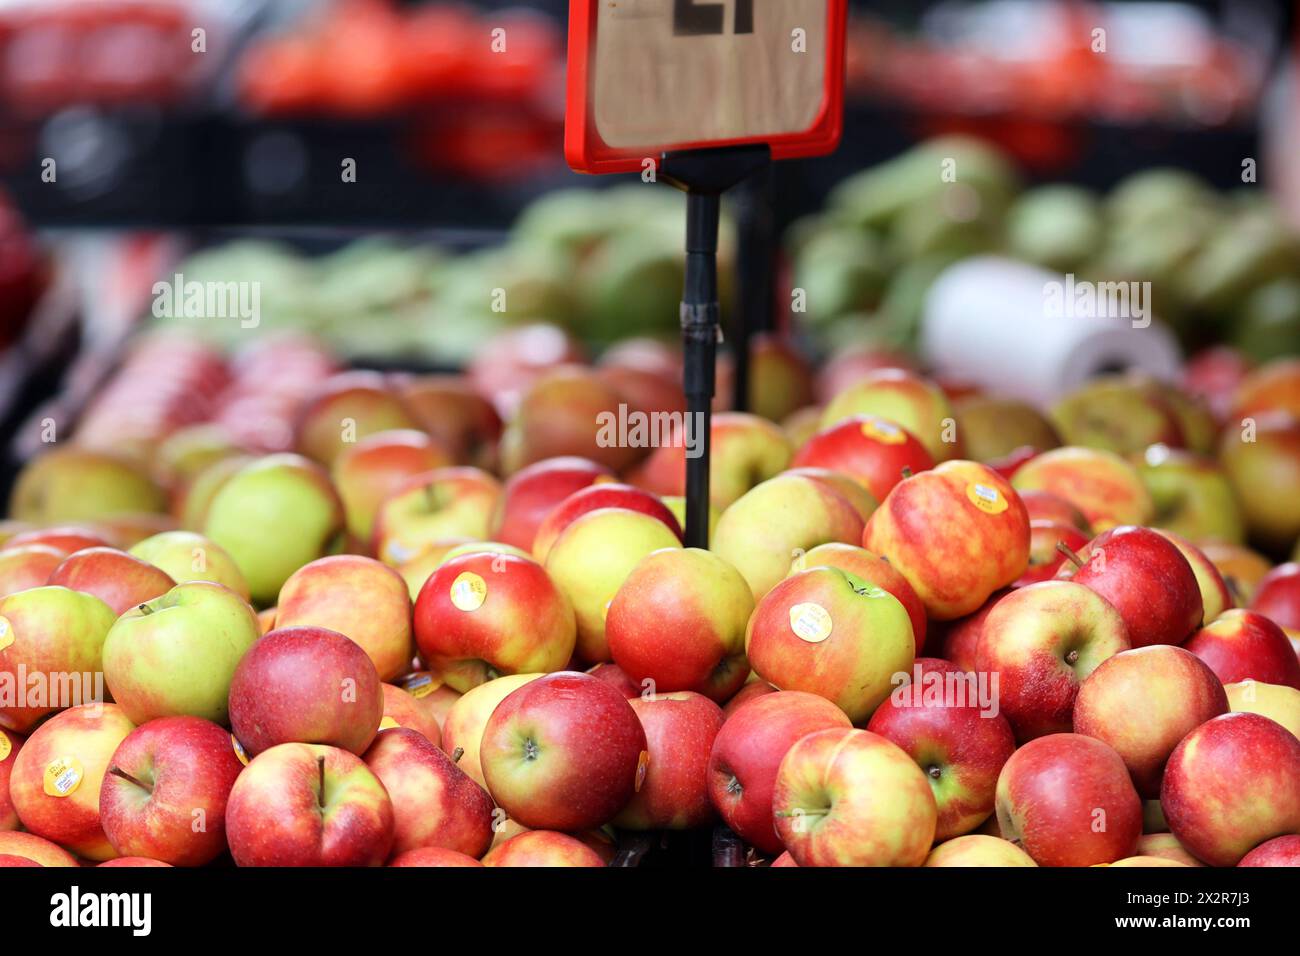 Obst ohne Verpackung Äpfel die lose angeboten werden, liegen an einem Obststand zum Verkauf bereit *** frutta senza imballaggio mele che vengono offerte sfuse sono disponibili per la vendita presso uno stand di frutta Foto Stock